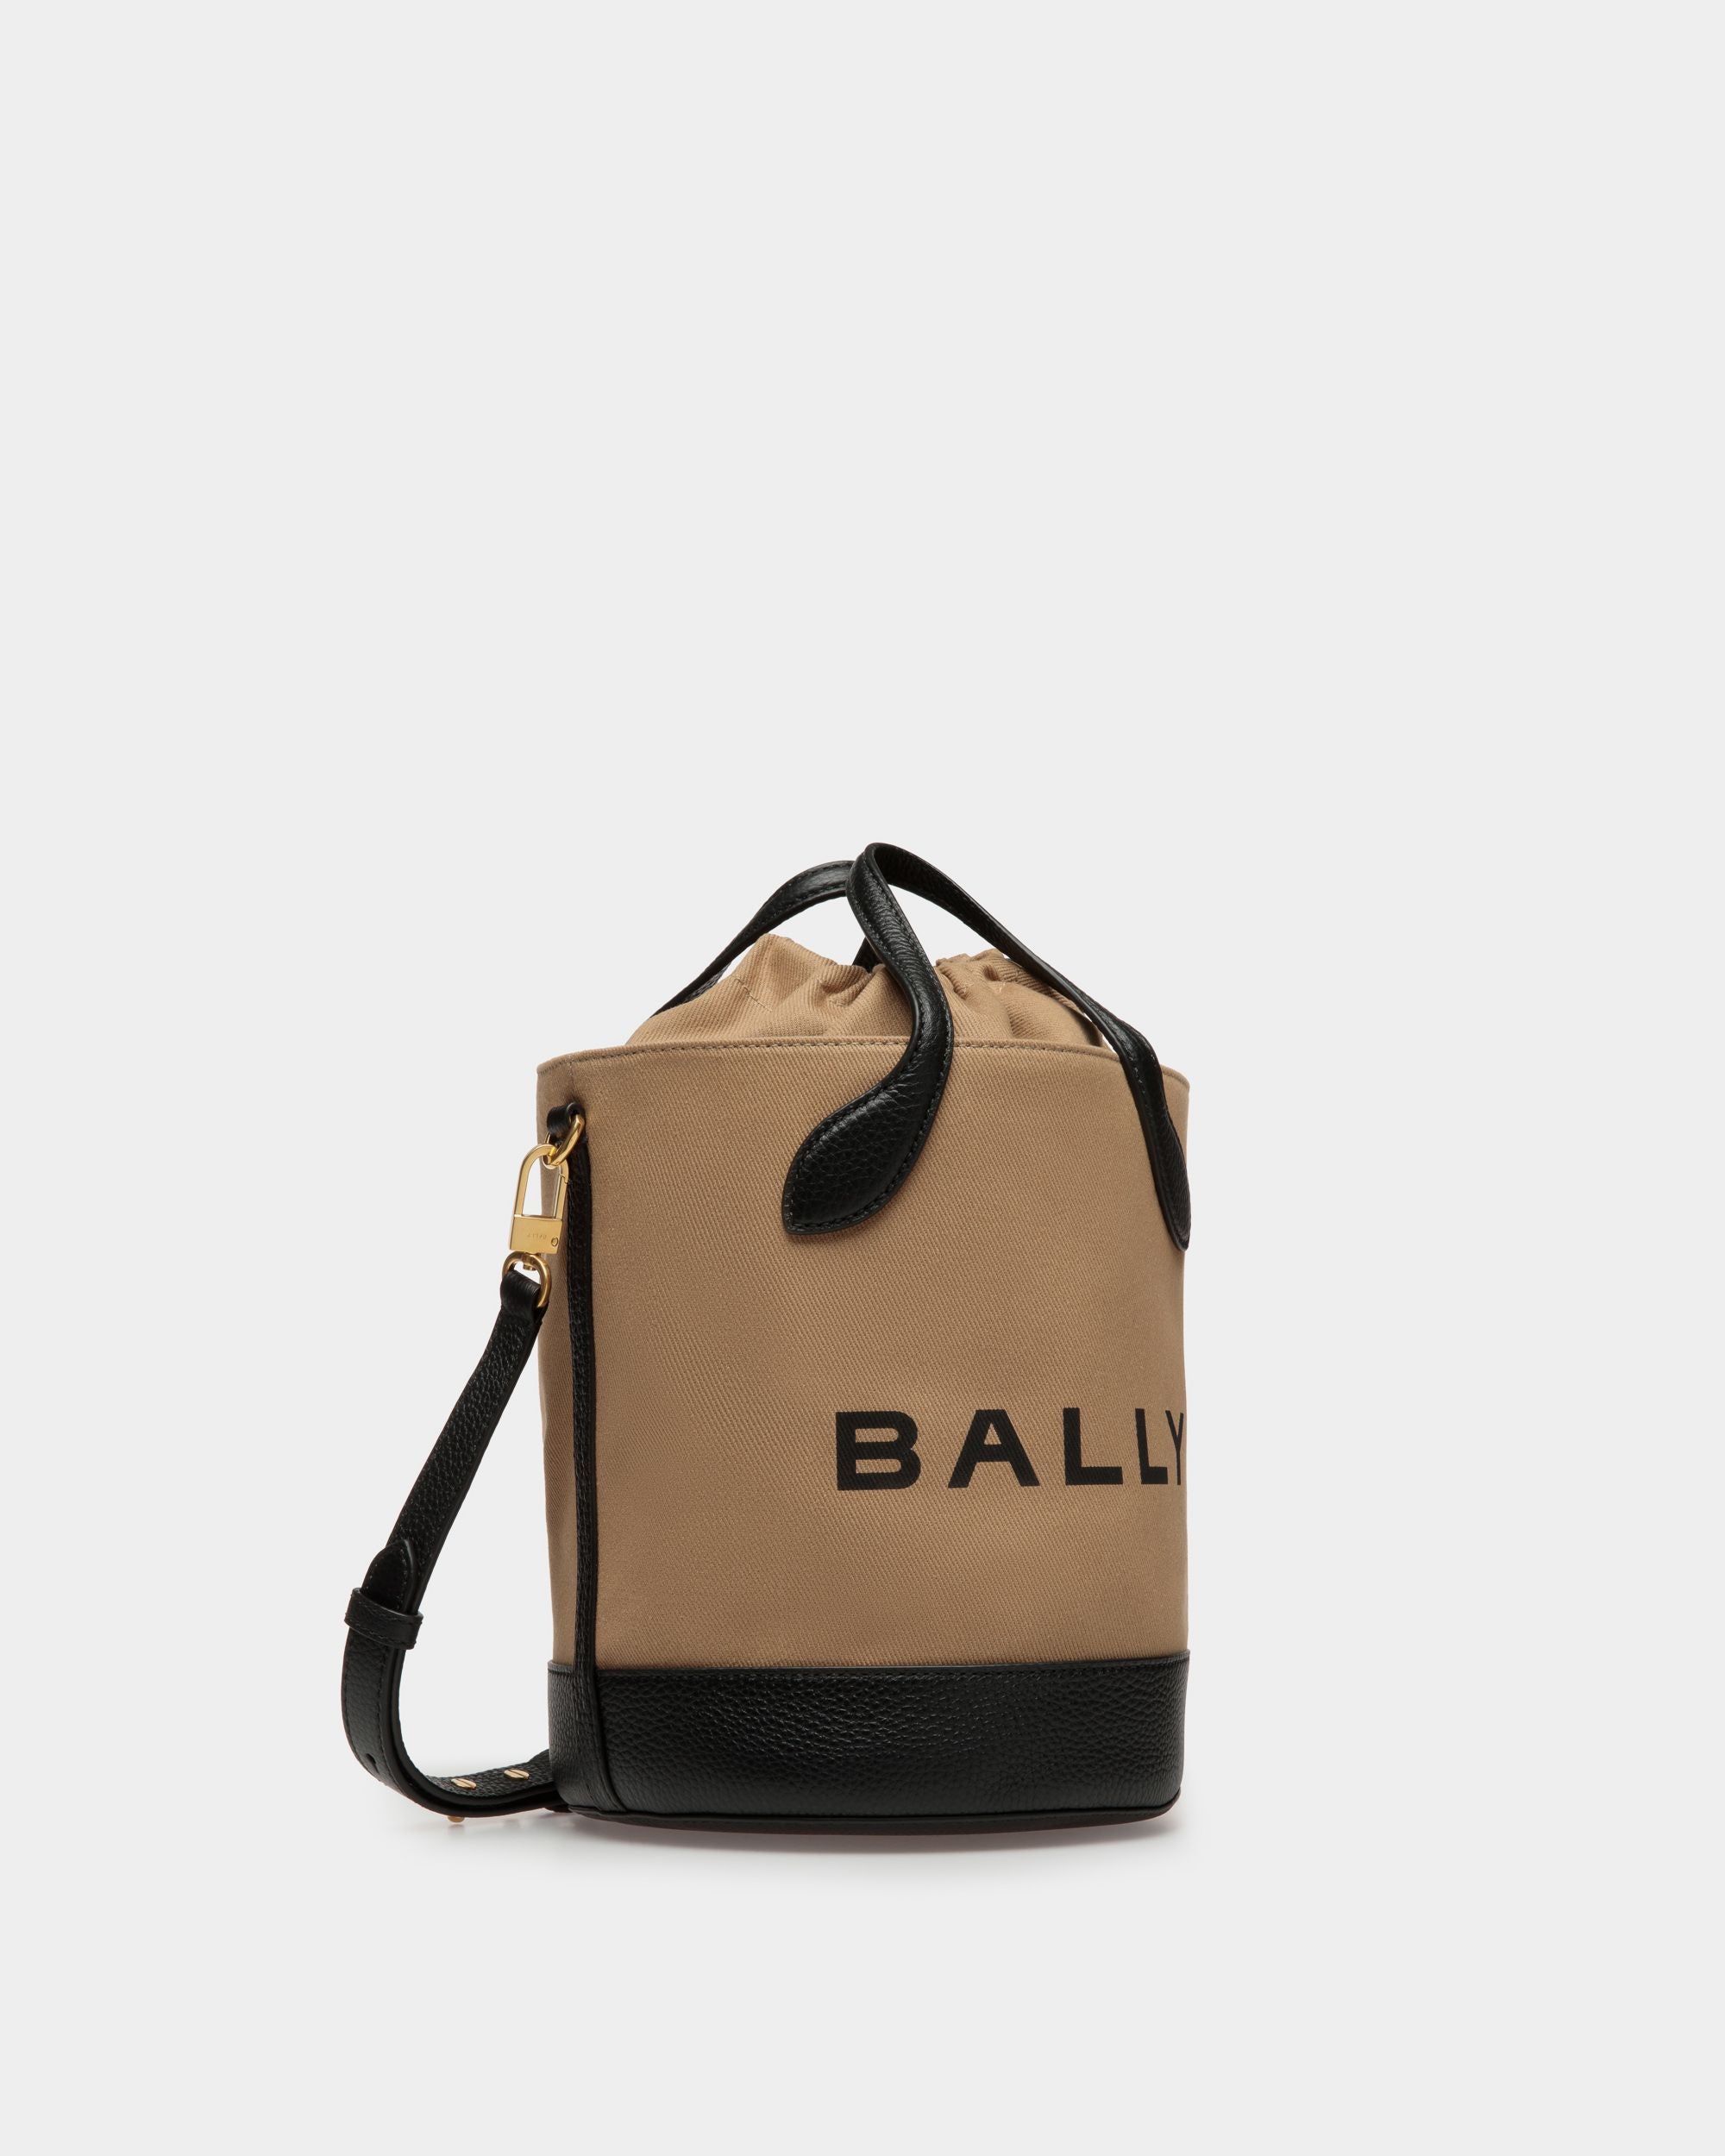 BALLY BAG